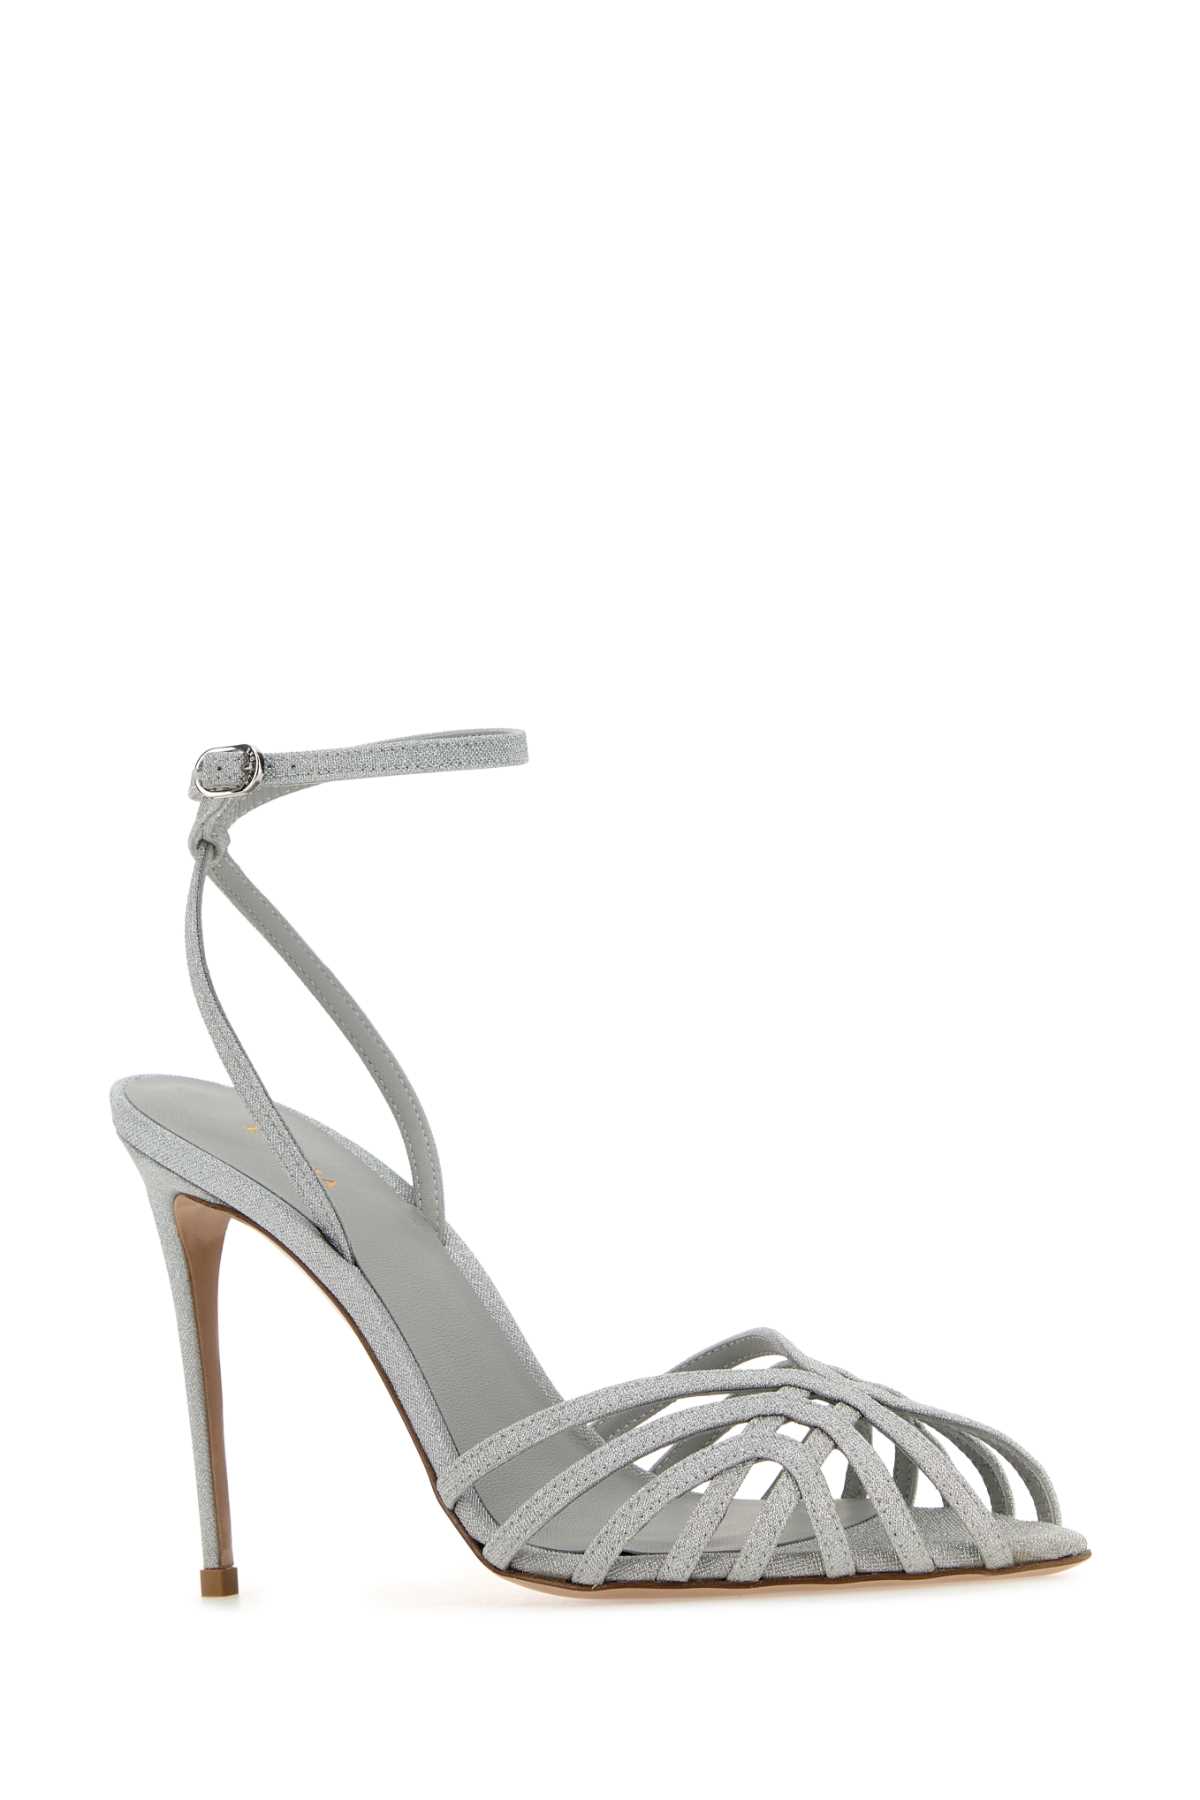 Le Silla Silver Fabric Embrace Sandals In Argento